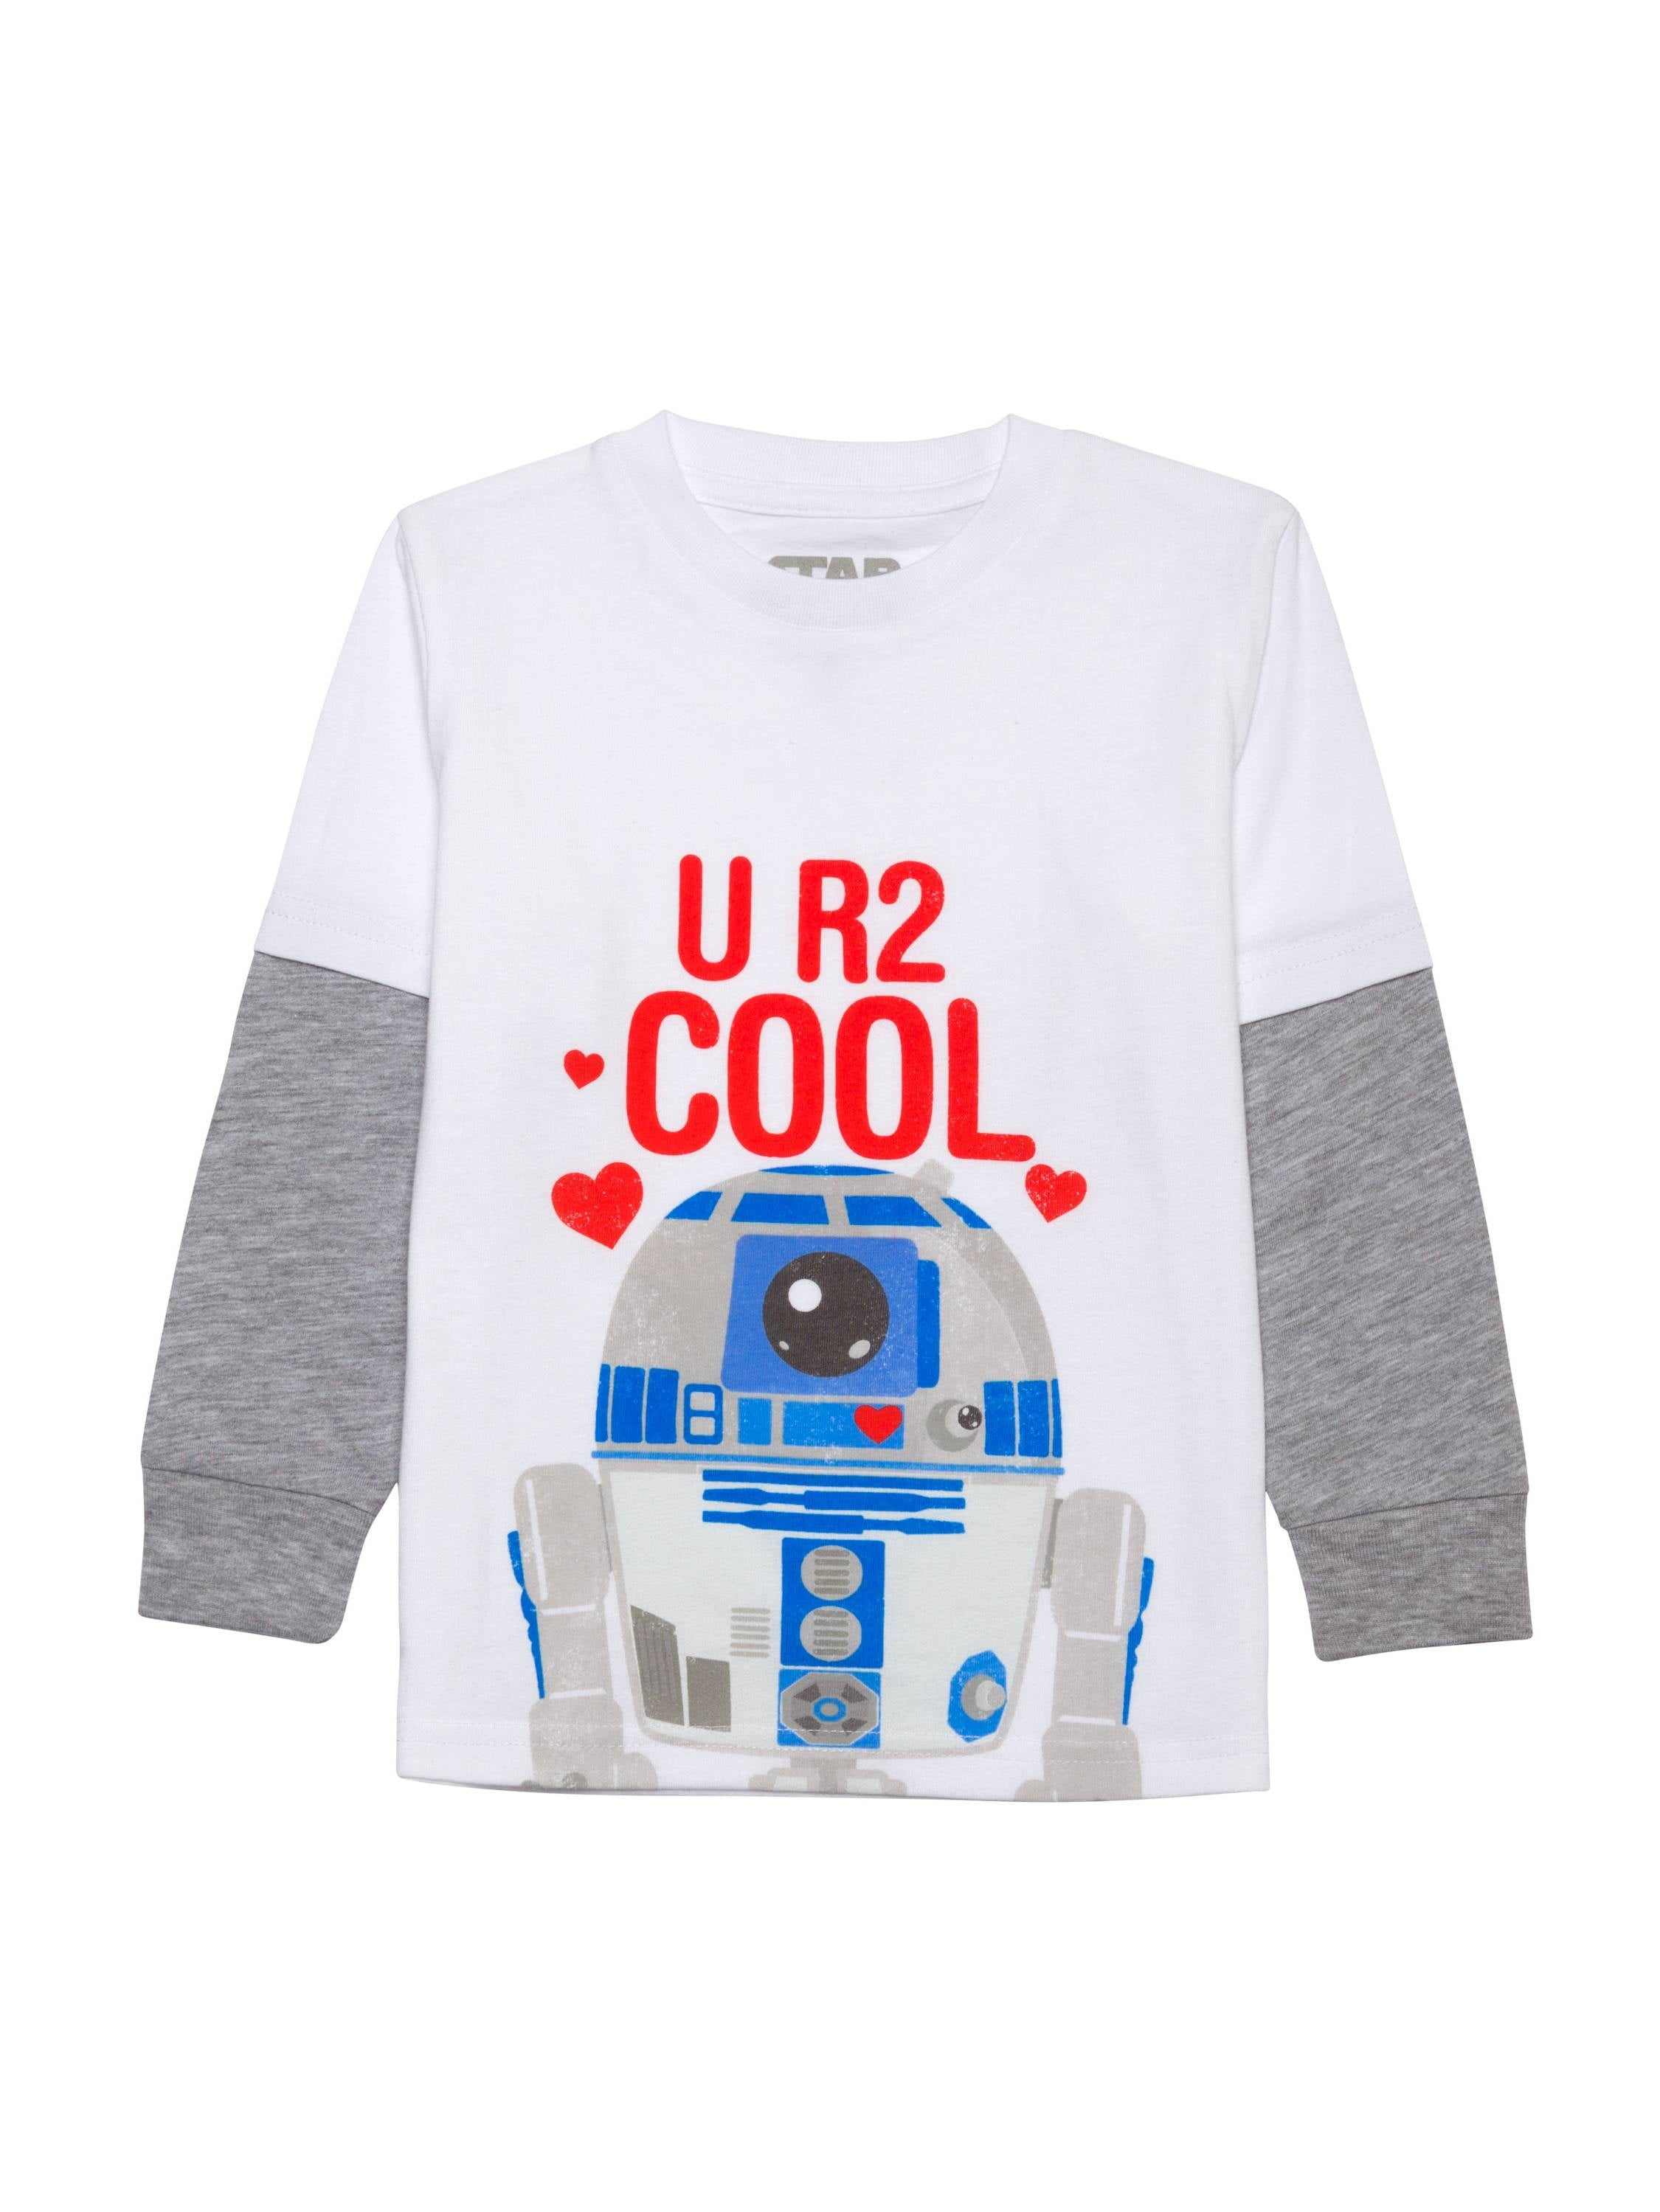 Star Wars Infant Toddler Boys U R2 Cool R2D2 Long Sleeve T-Shirt Tee Shirt 